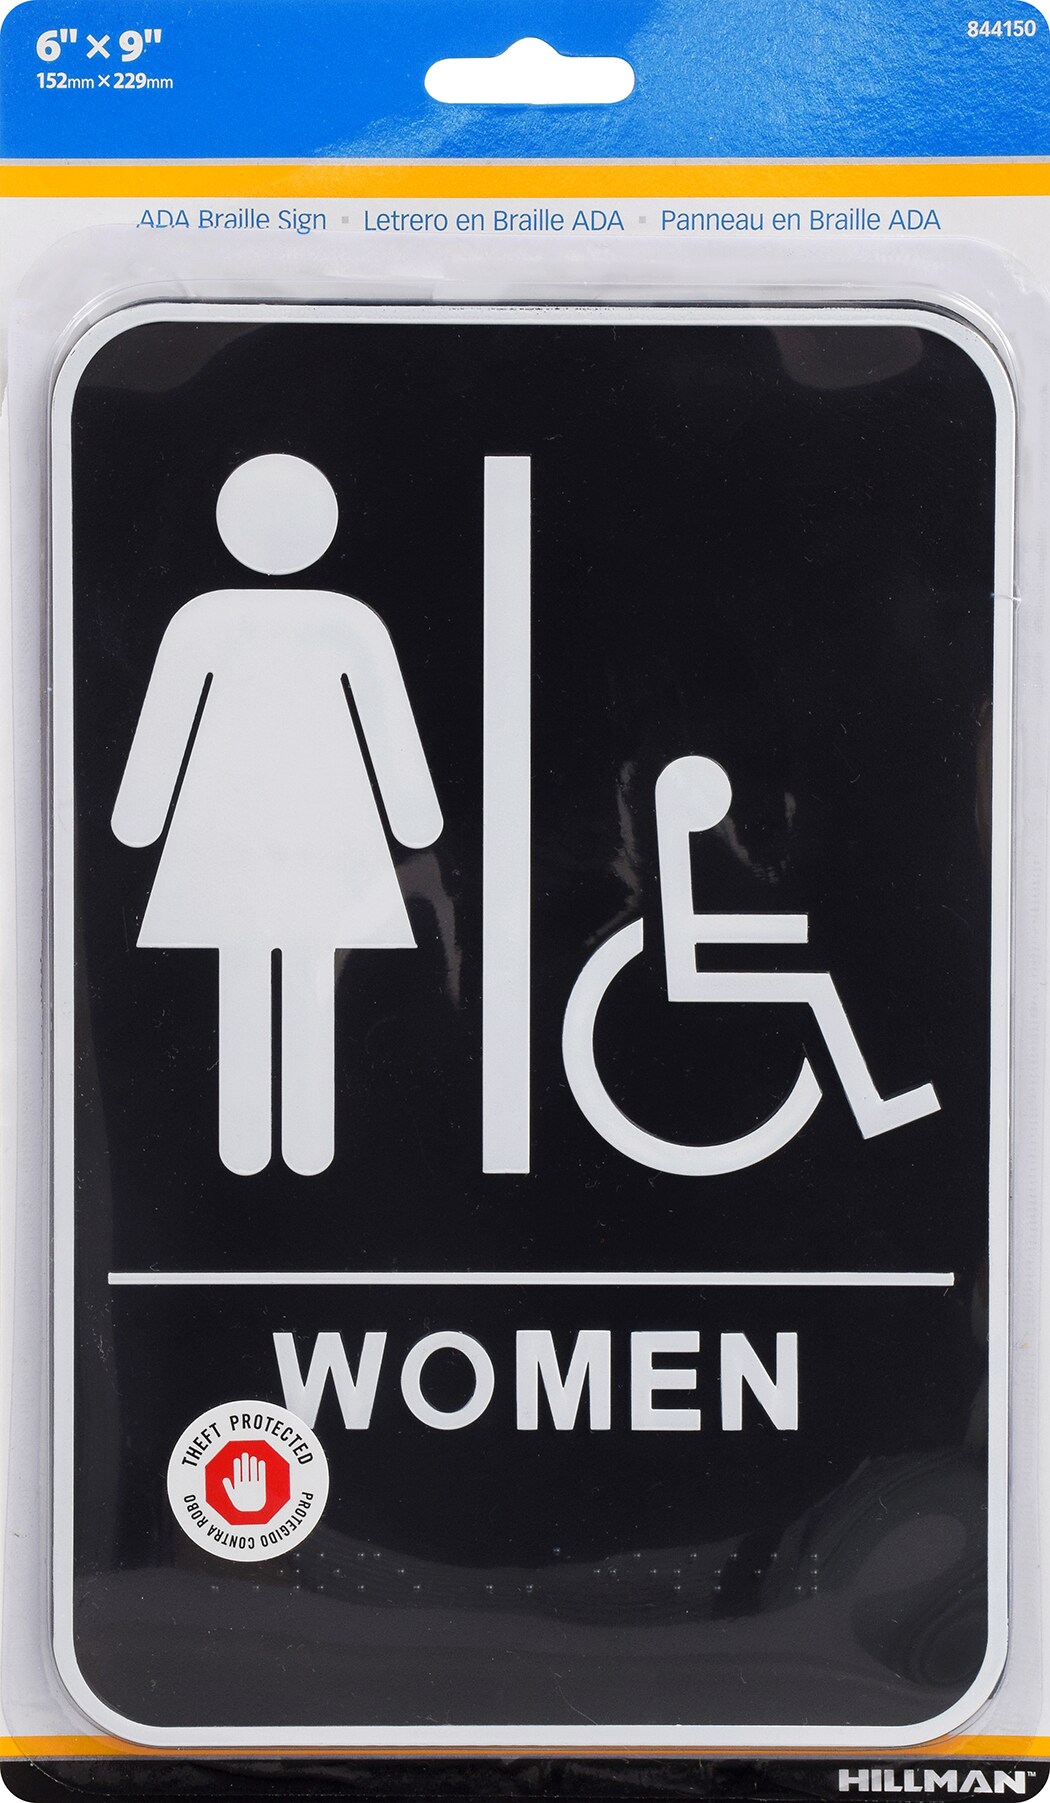 Restroom Signs,9 x 6In,Plastic,PR COSCO 98095 